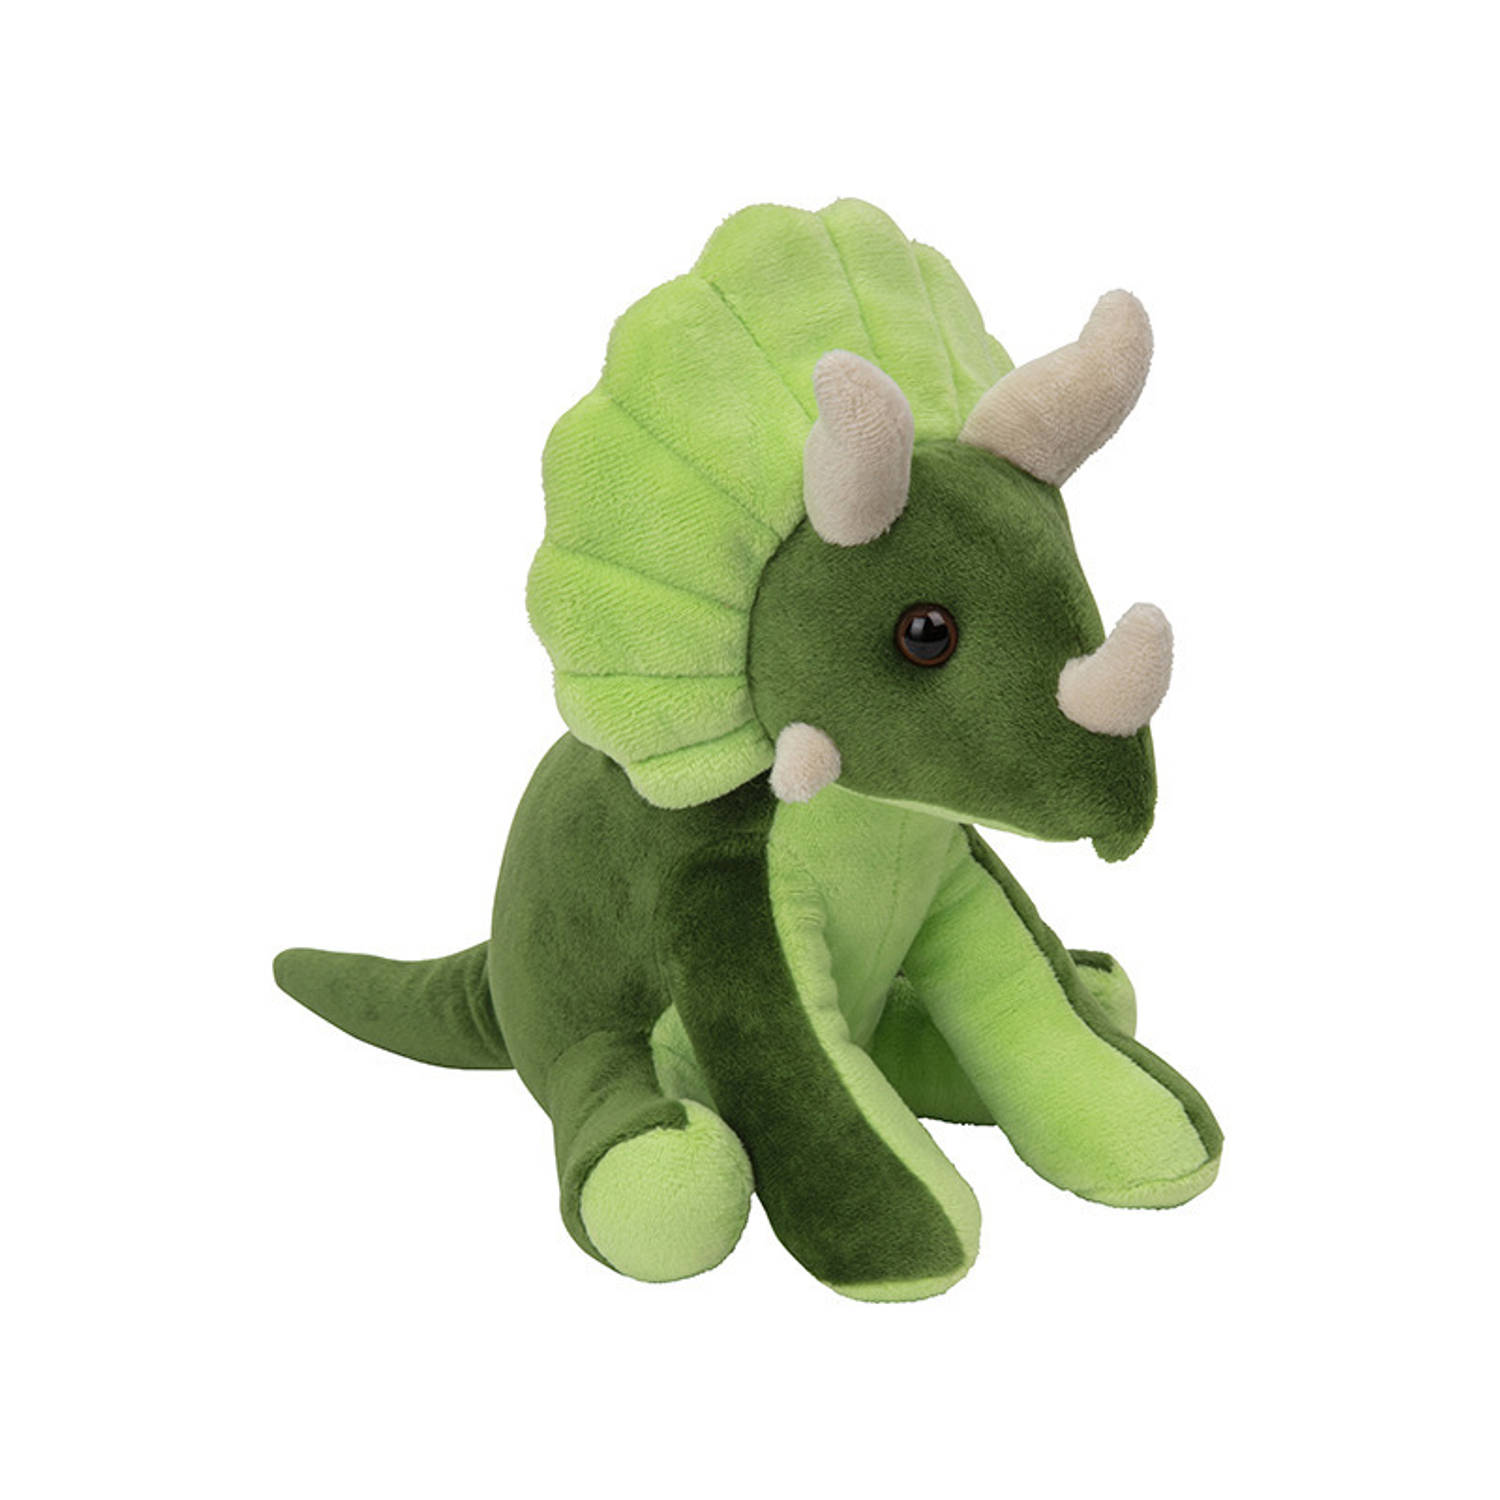 Pluche knuffel dinosaurus Triceratops van 20 cm - Knuffeldieren speelgoed